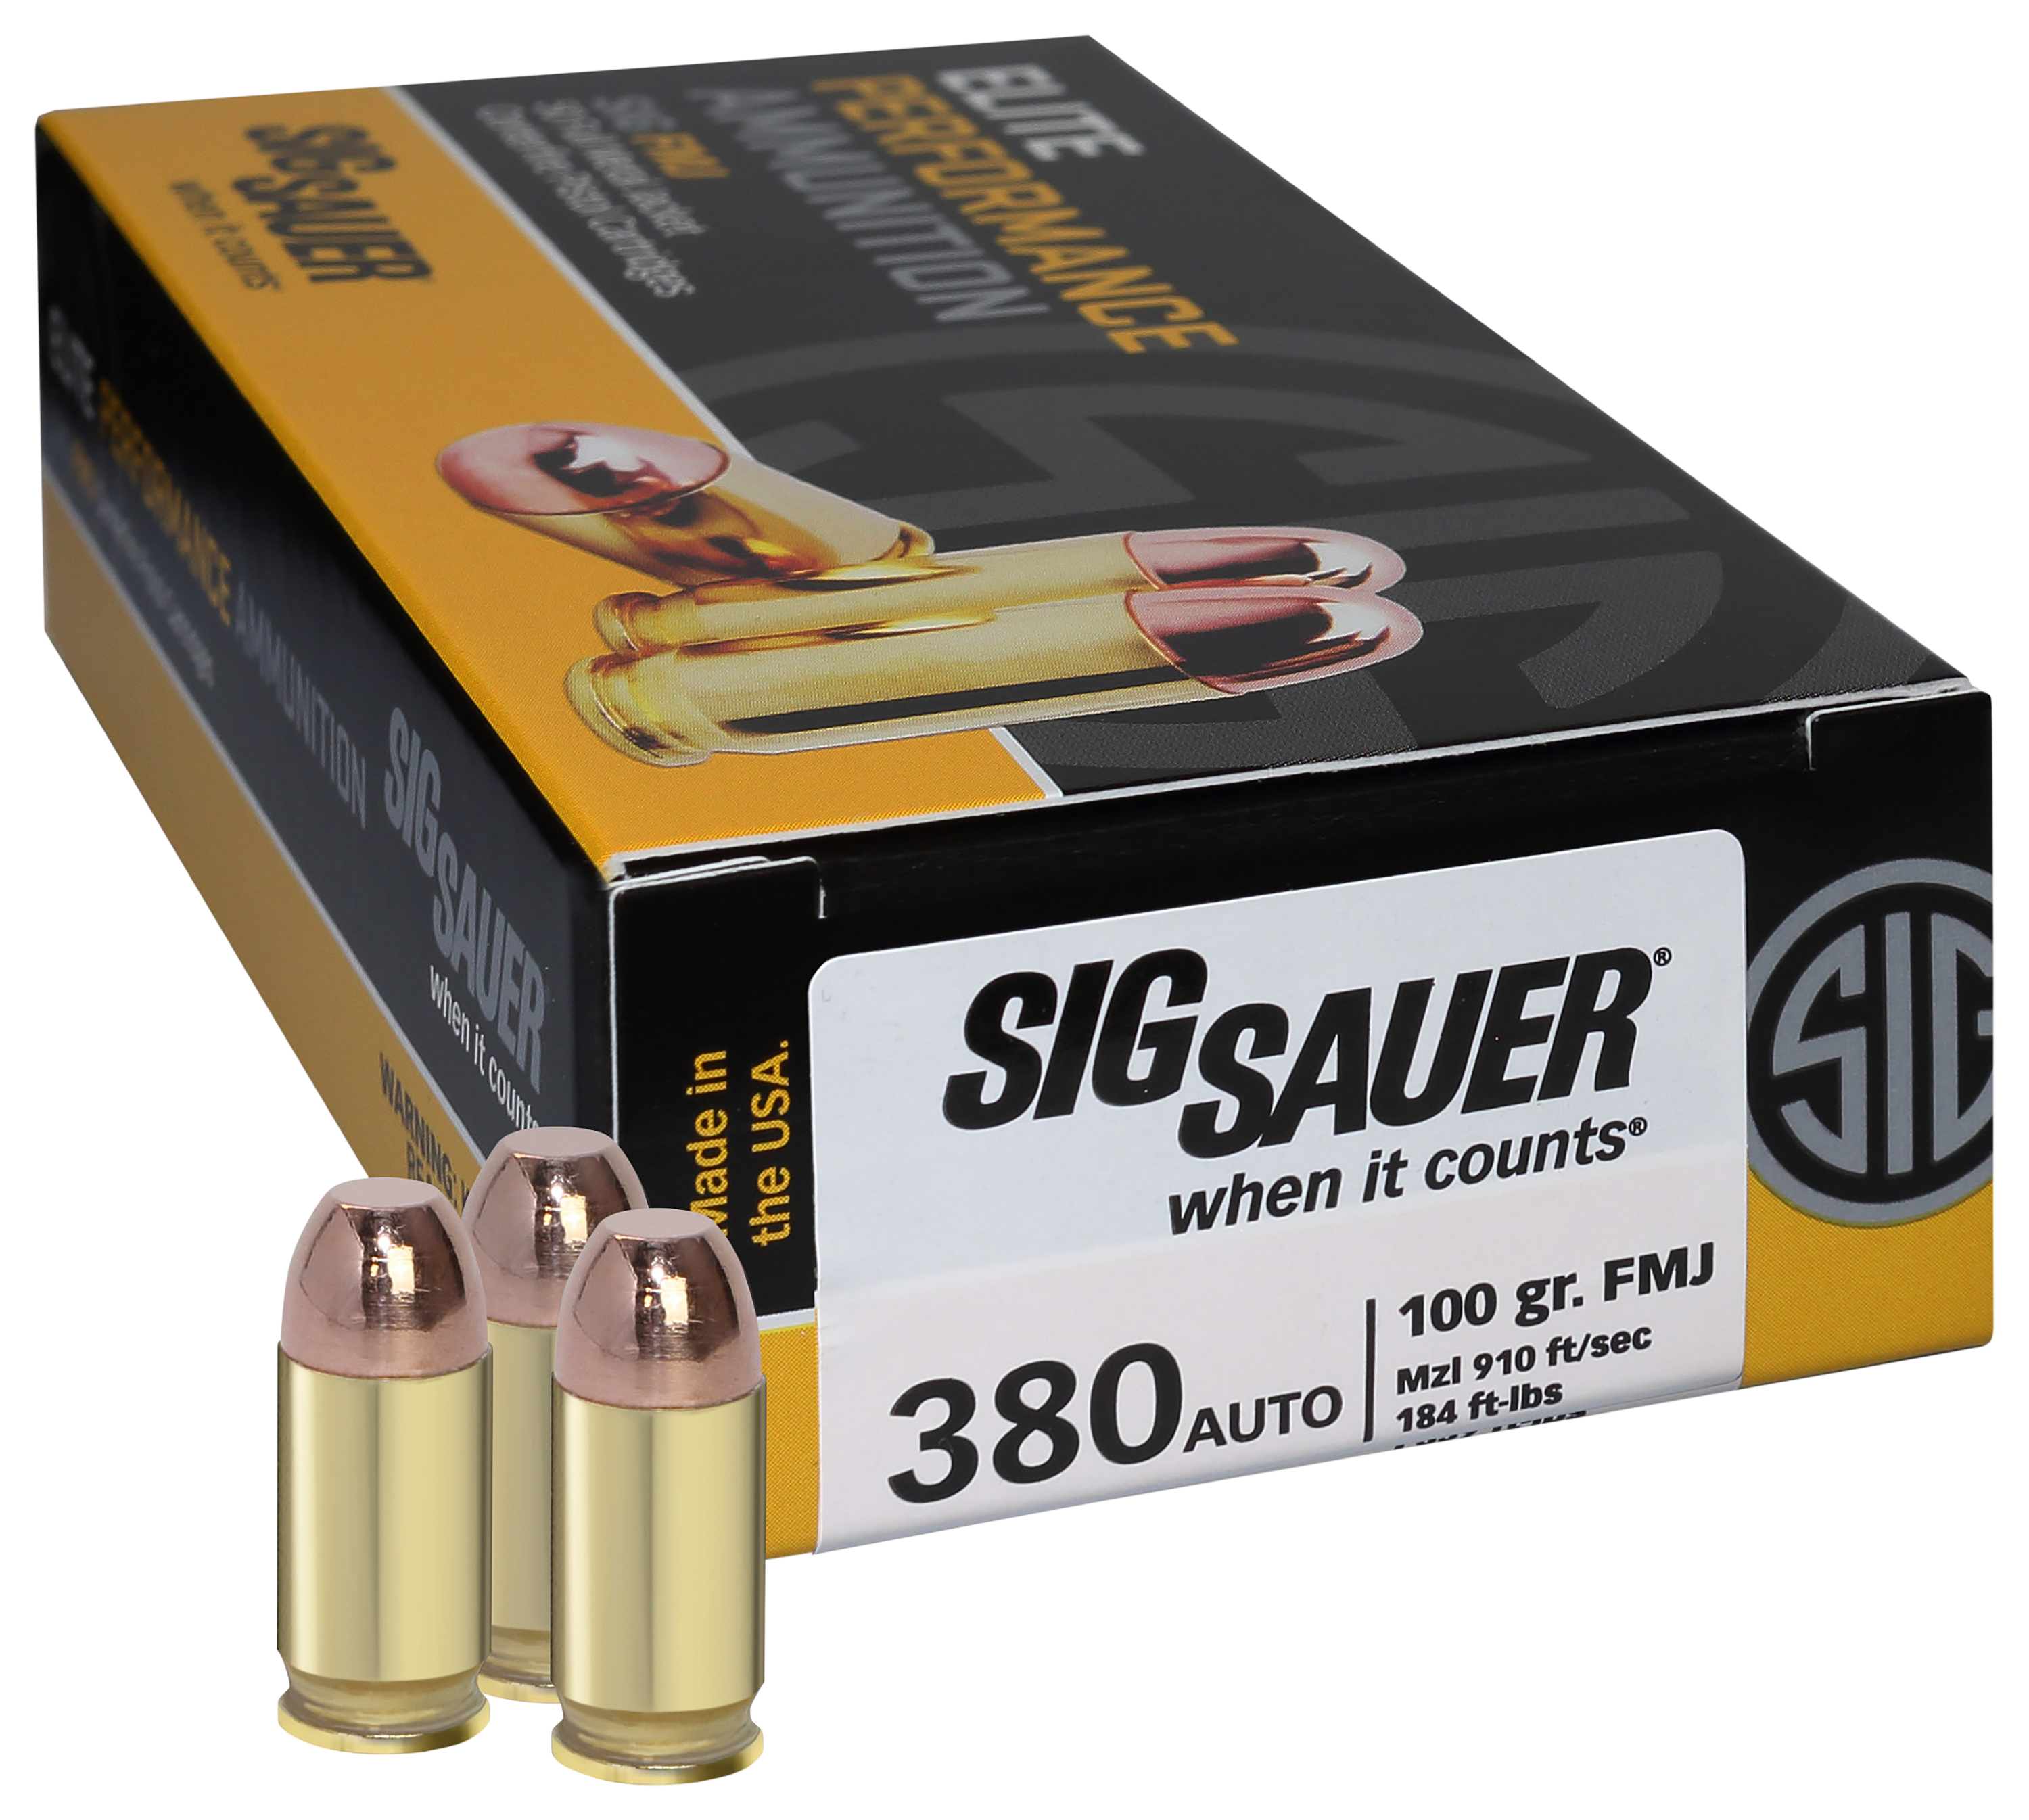 Sig Sauer Venari Hunting 277 SIG FURY Ammo 130 Gr SP - Ammo Deals